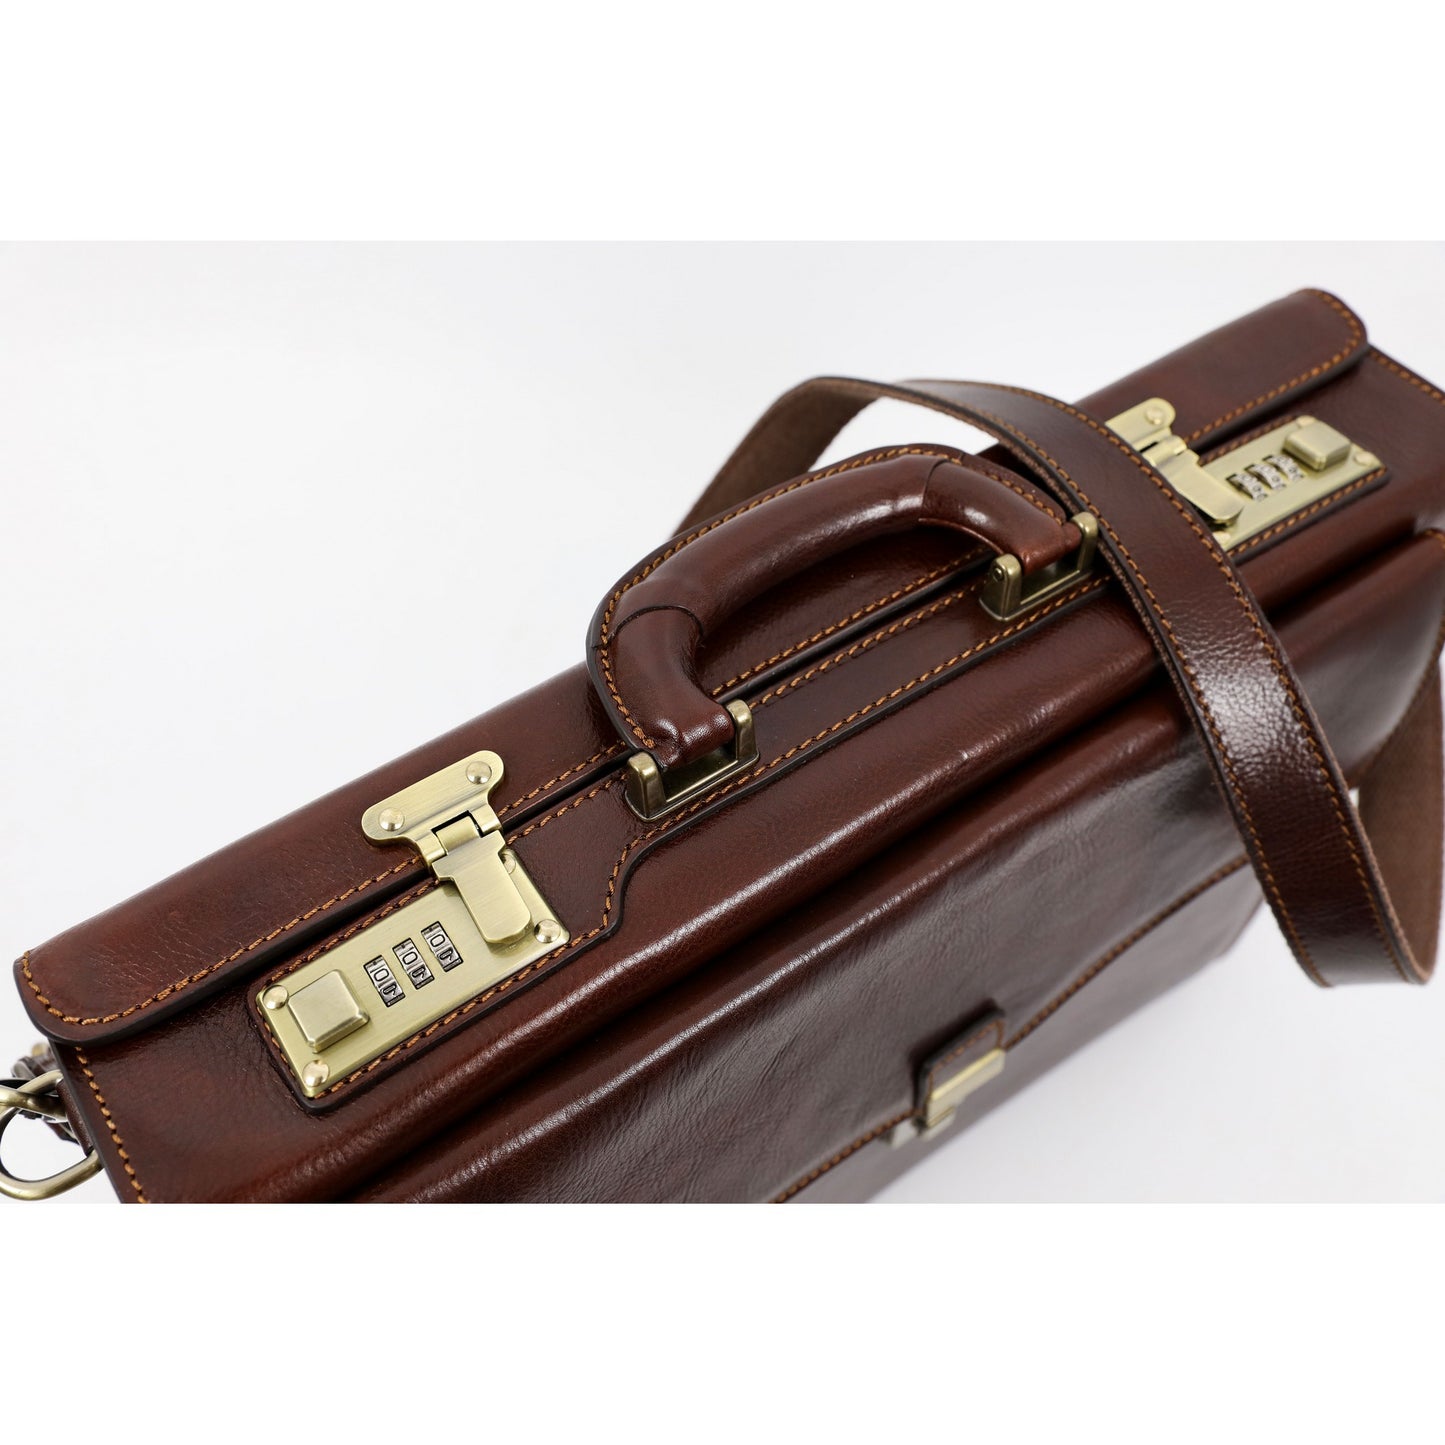 Leather Code-lock Briefcase - The Watchmen